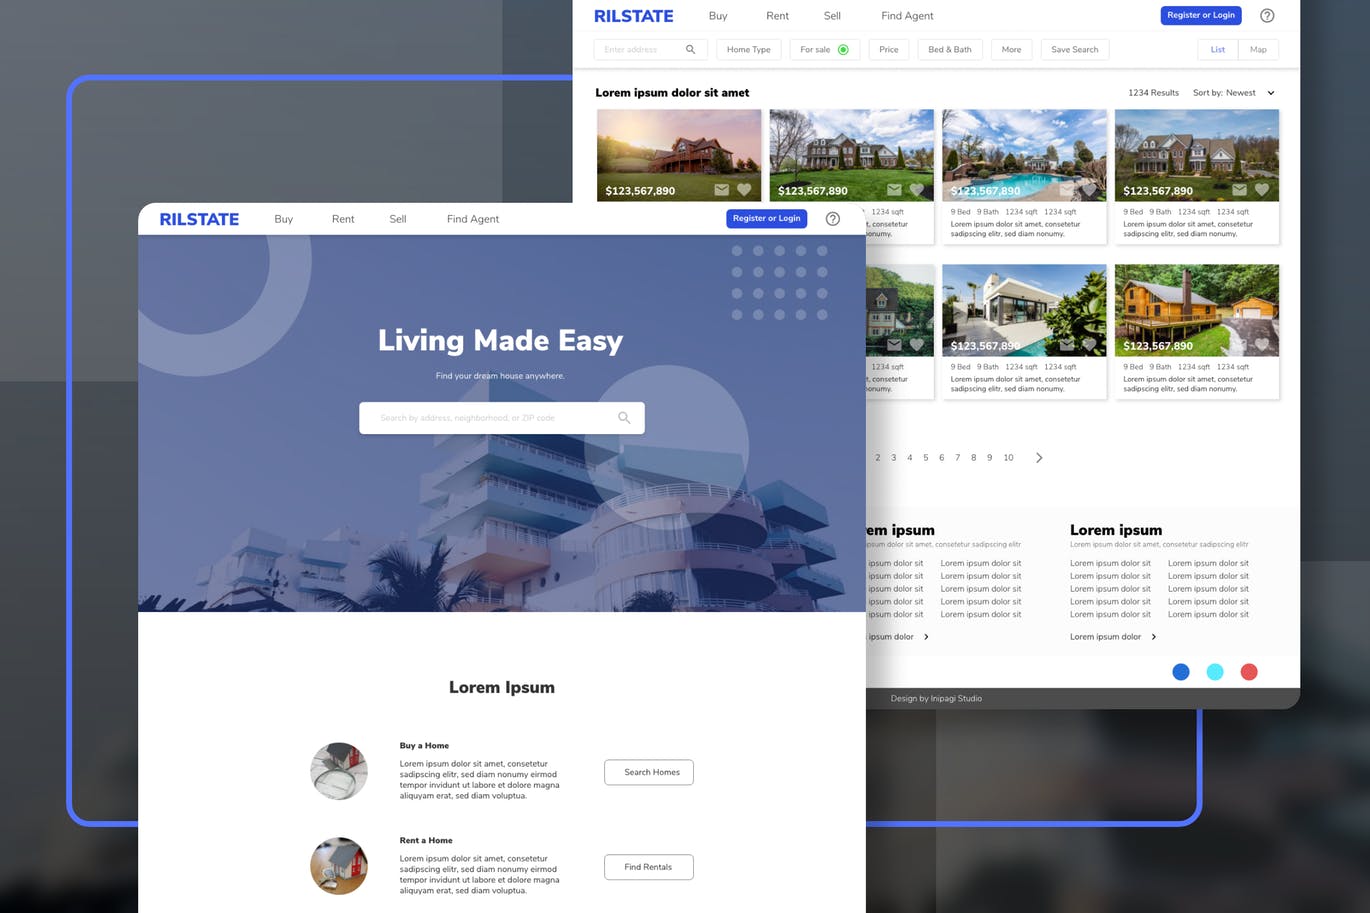 房地产租赁销售网站设计HTML模板素材中国精选 RILSTATE – Real Estate Homepage Template插图